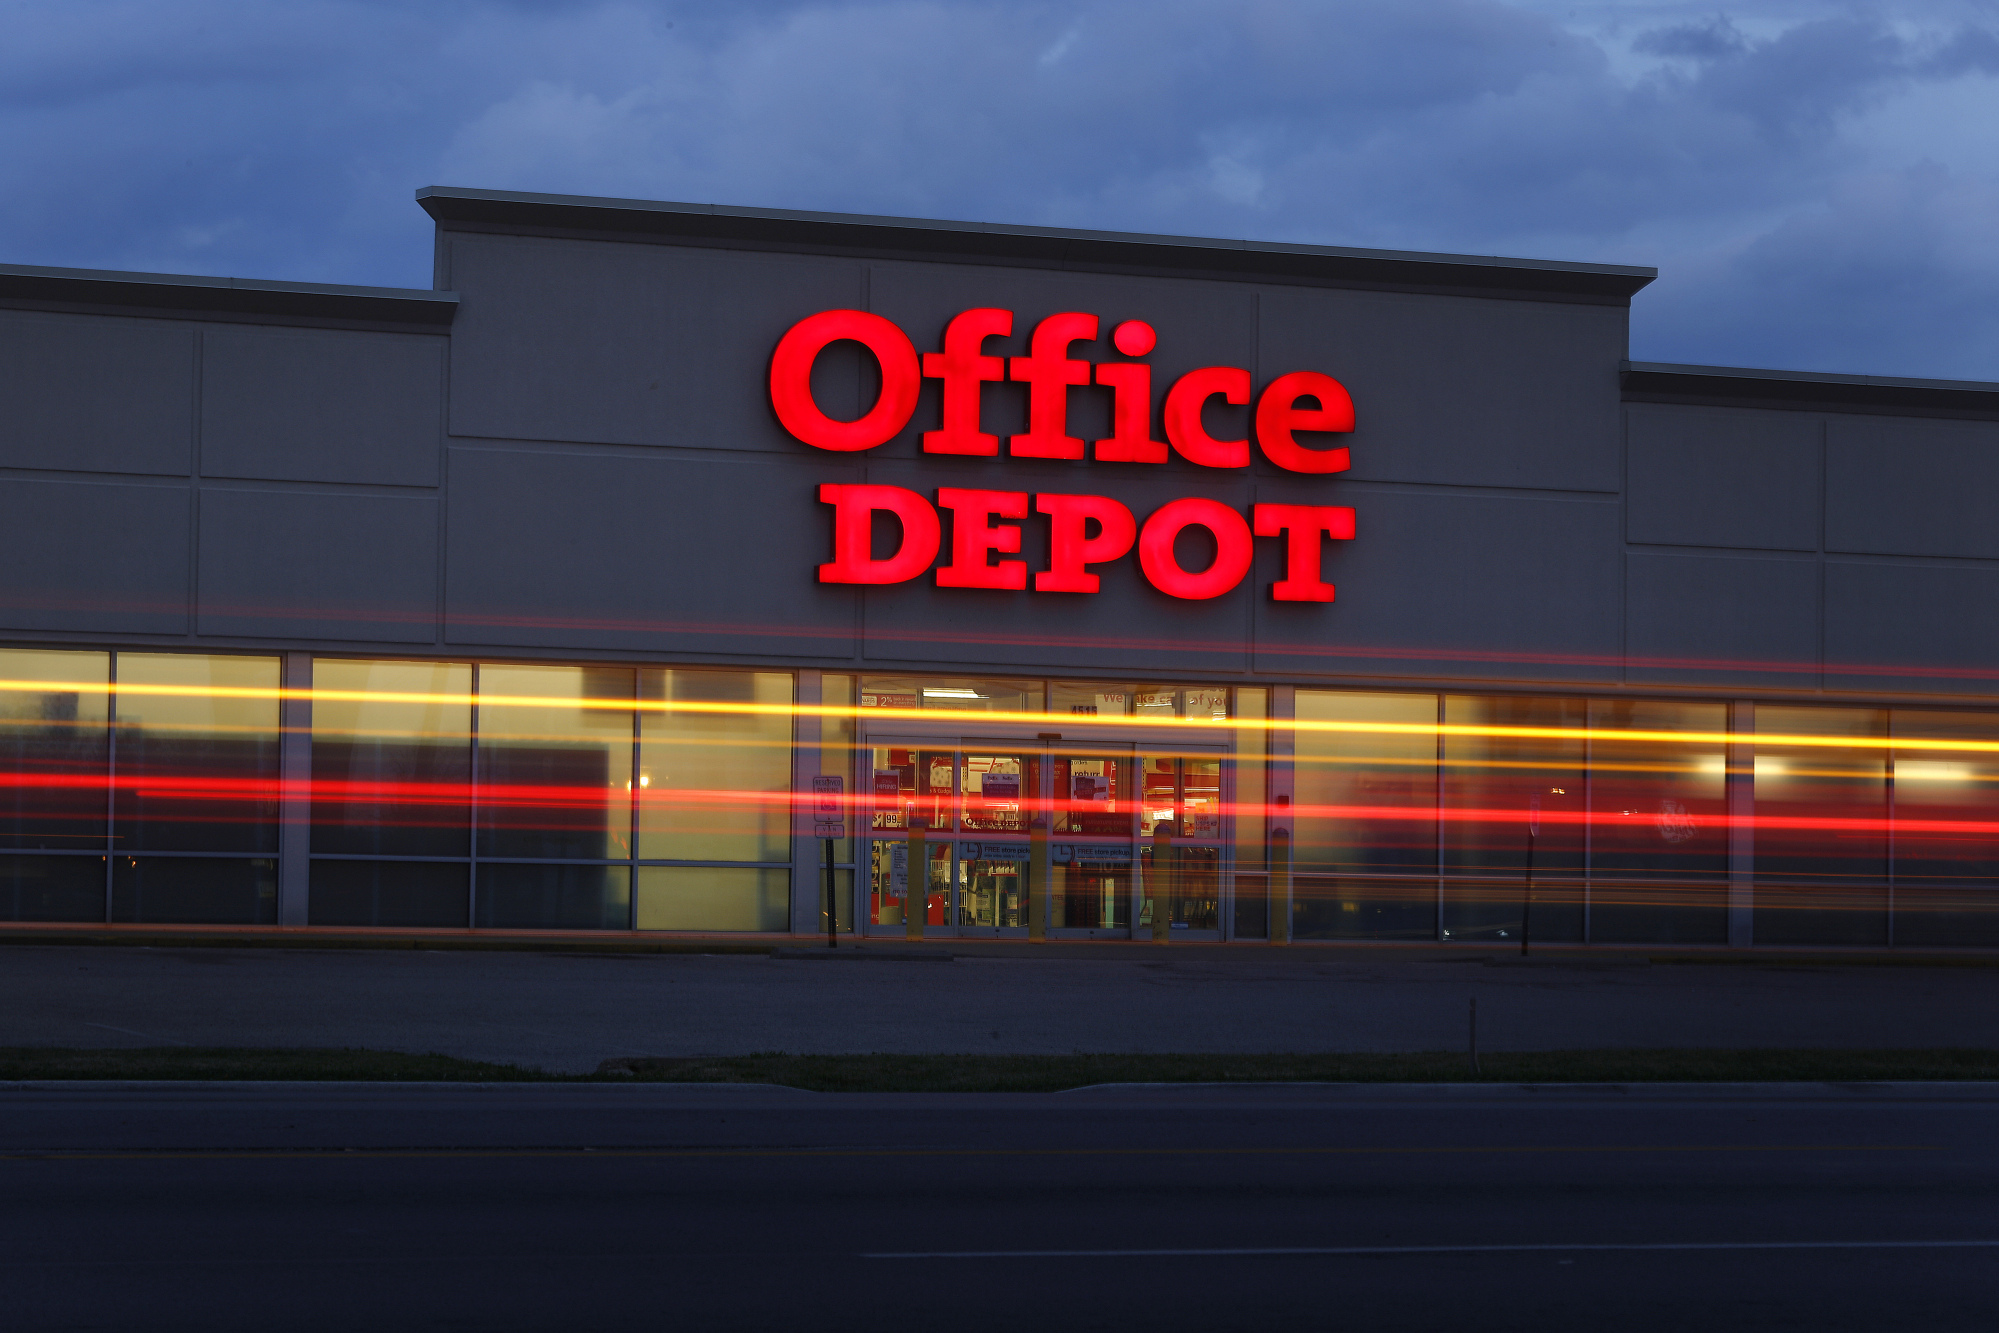 Store Office Depot 100 Quality, Save 60 jlcatj.gob.mx